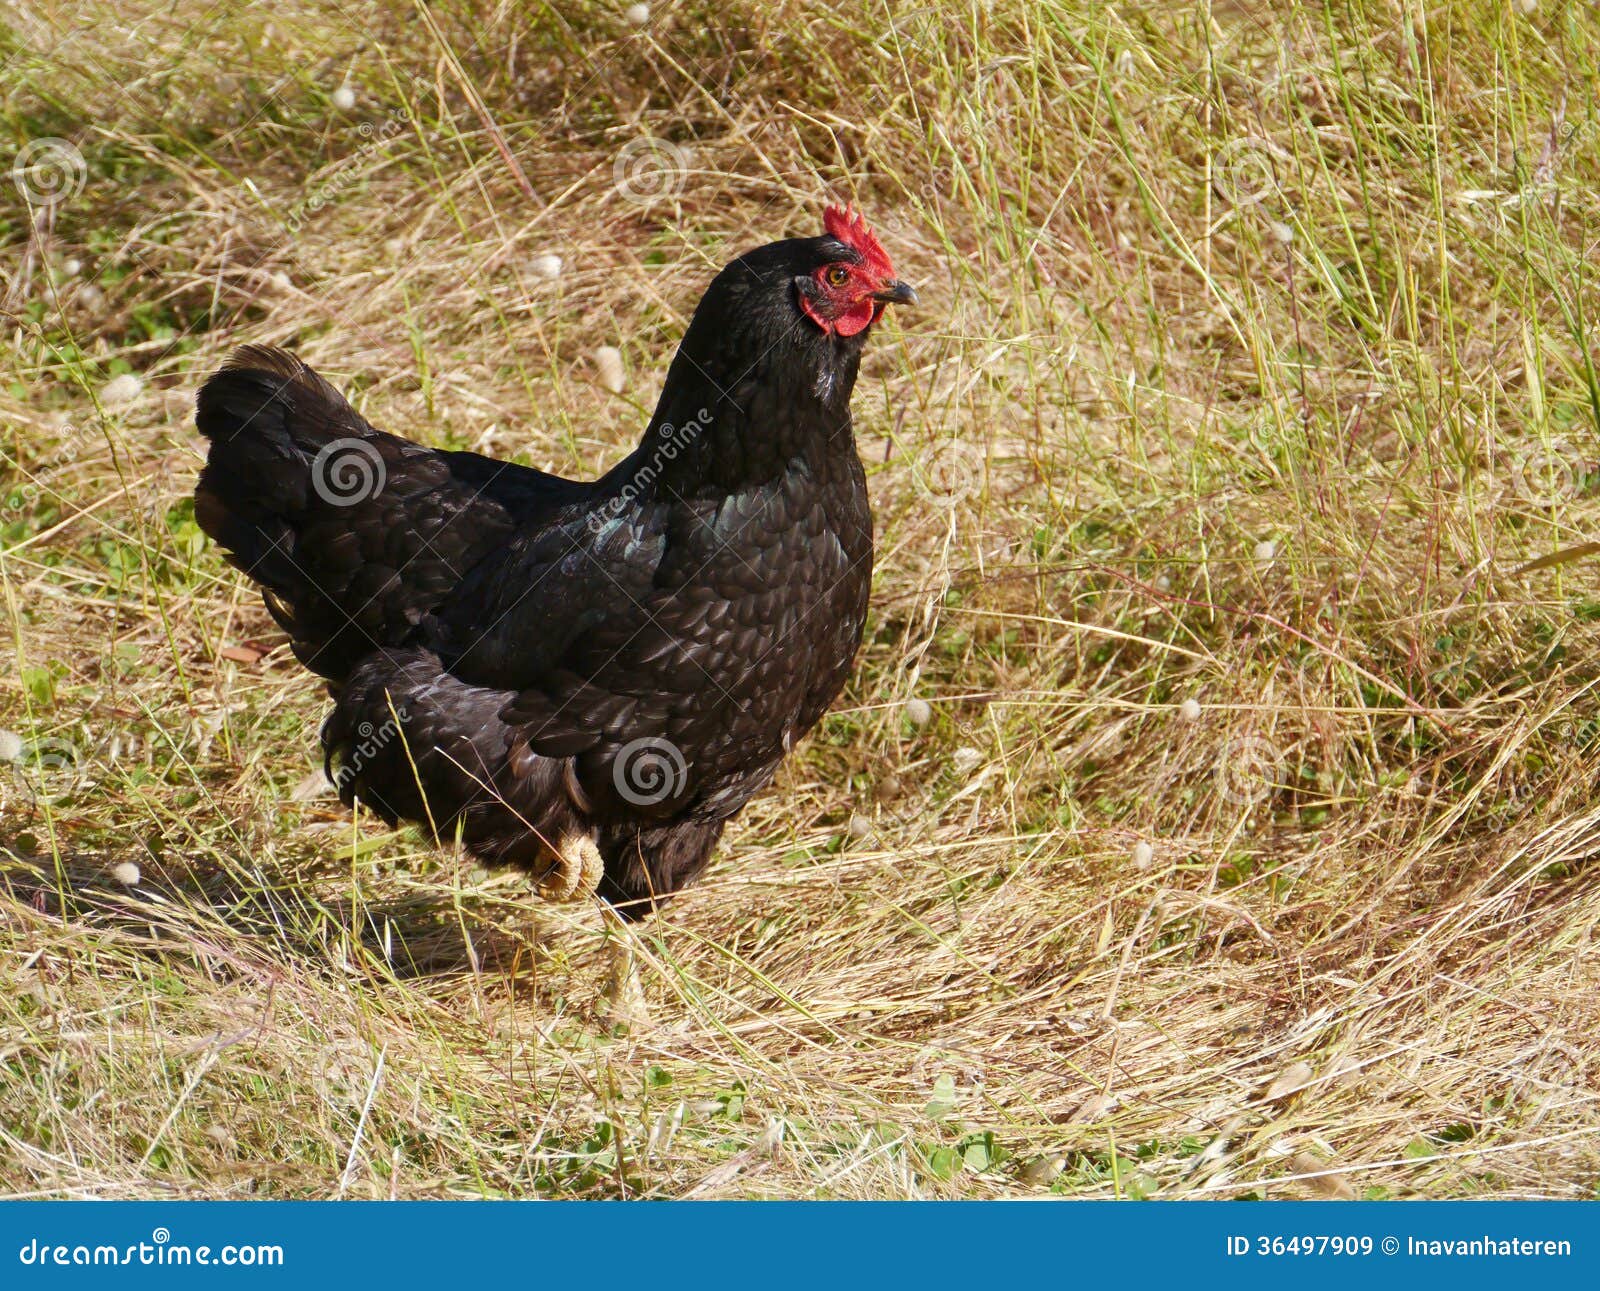 The Australorp is a black chicken breed of Australian origin in 